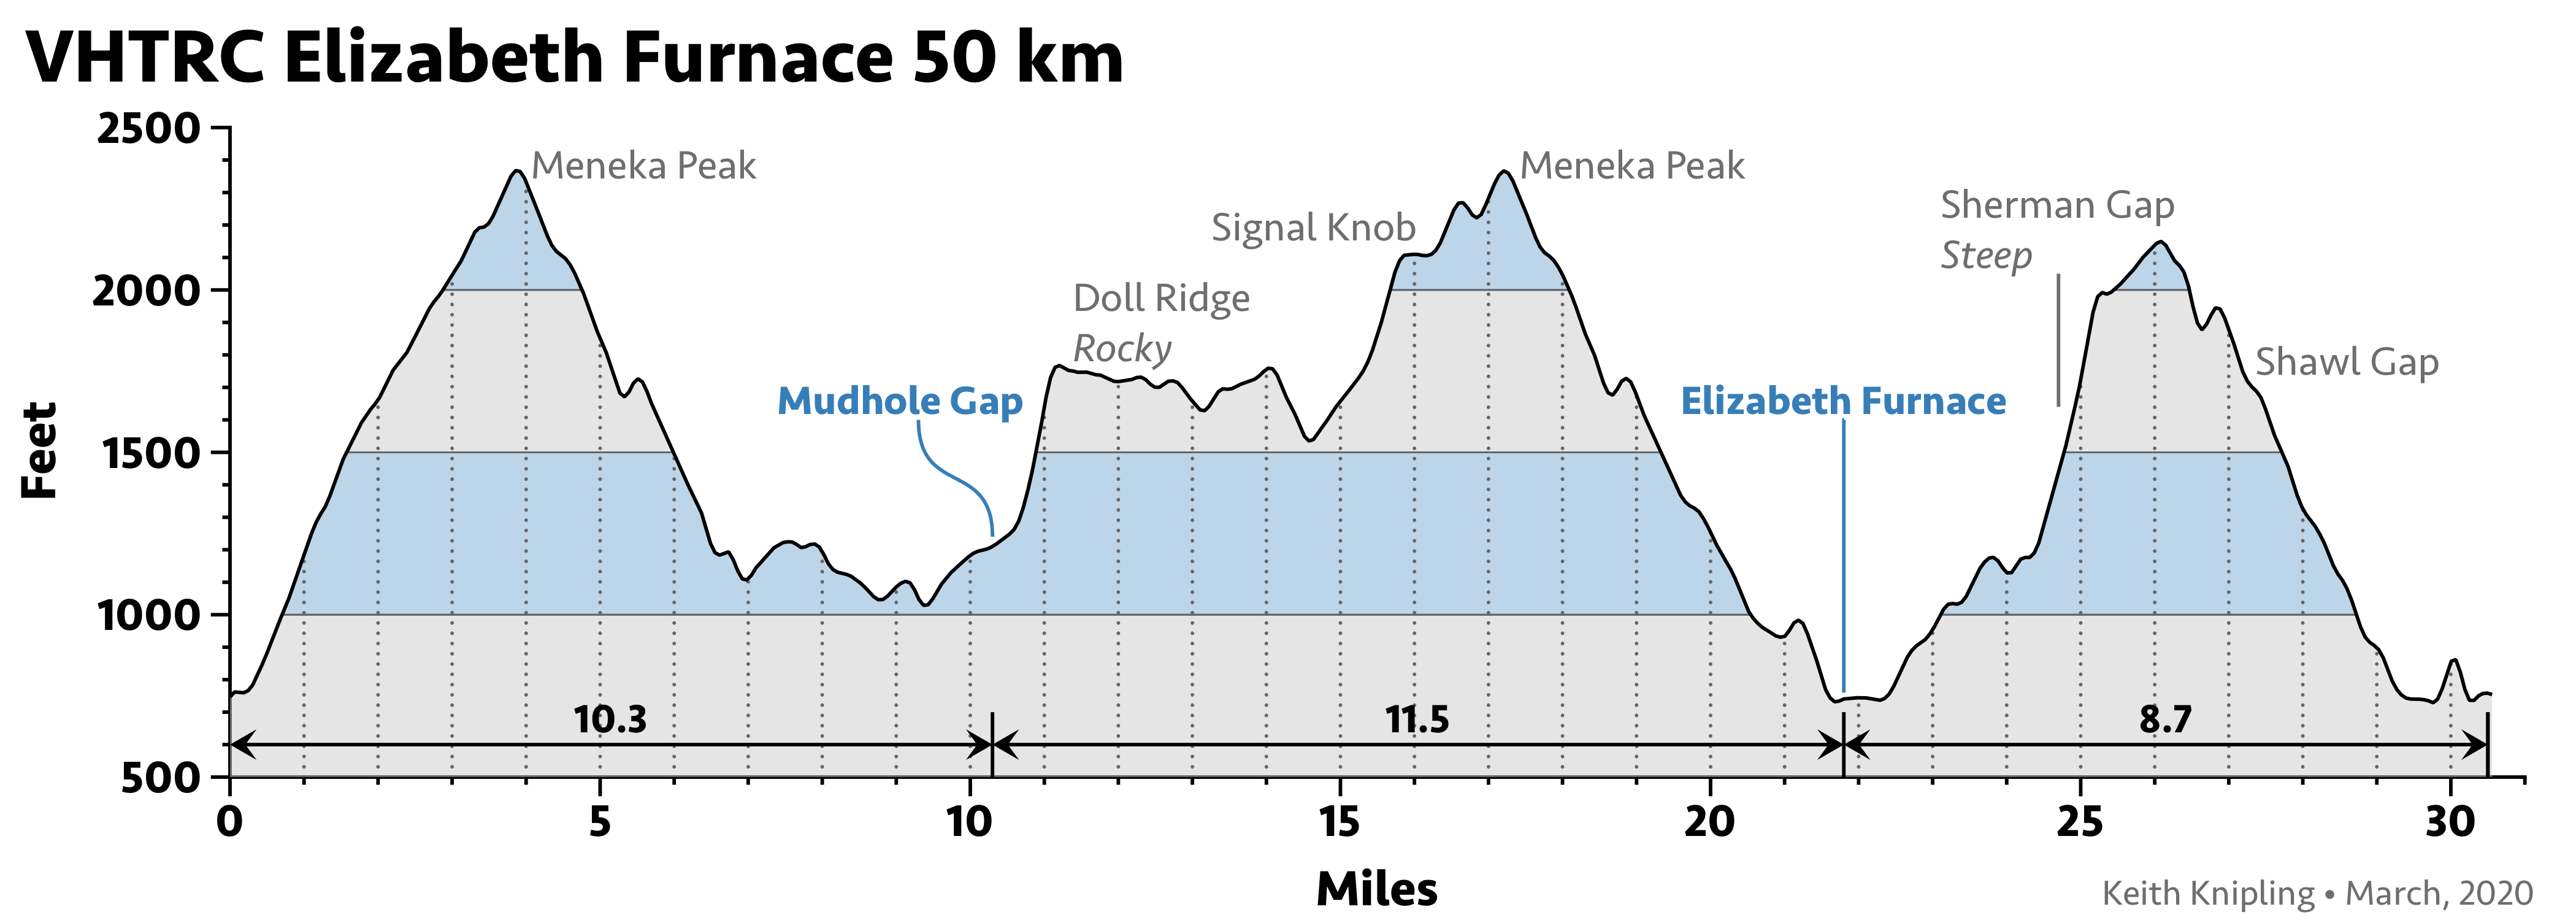 Elizabeth Furnace 50 km elevation profile